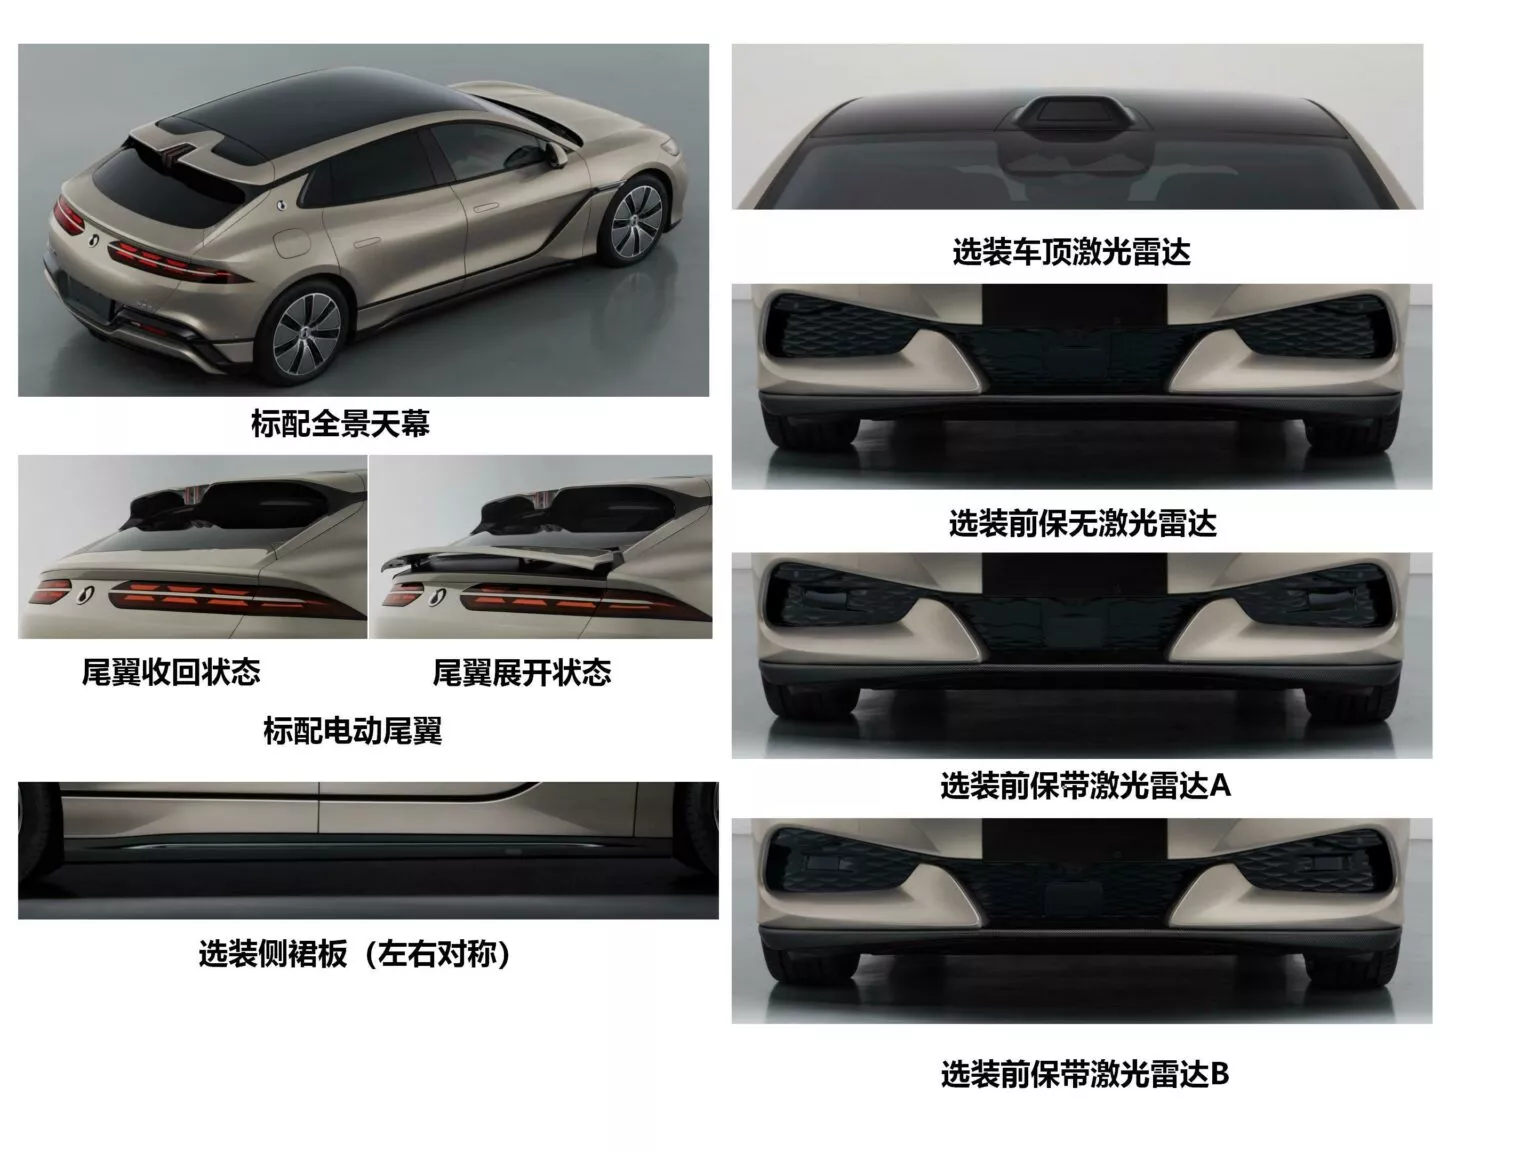 Denza Z9 GT – Xe Trung Quốc mạnh 952 mã lực, cạnh tranh Porsche Panamera denza-z9-gt-3-1-1536x1152.webp